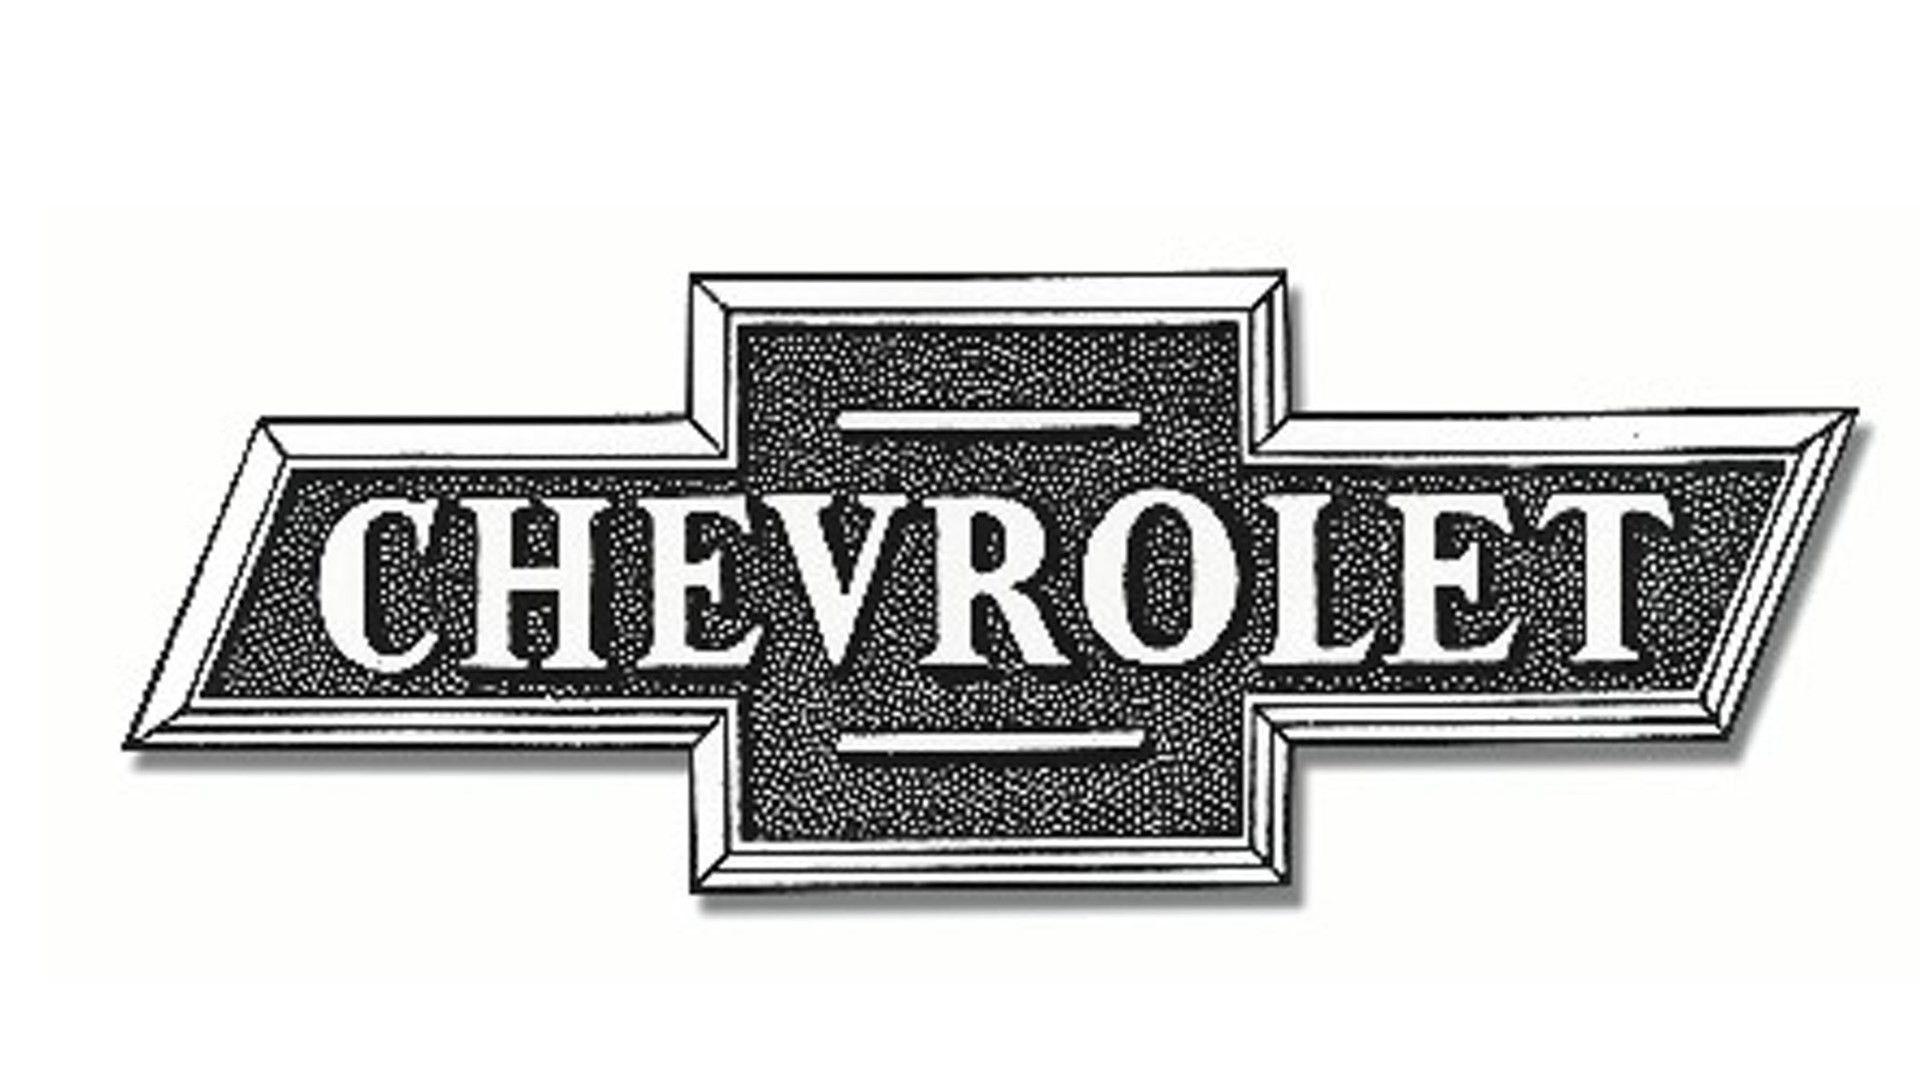 Chevy Emblem Wallpaper